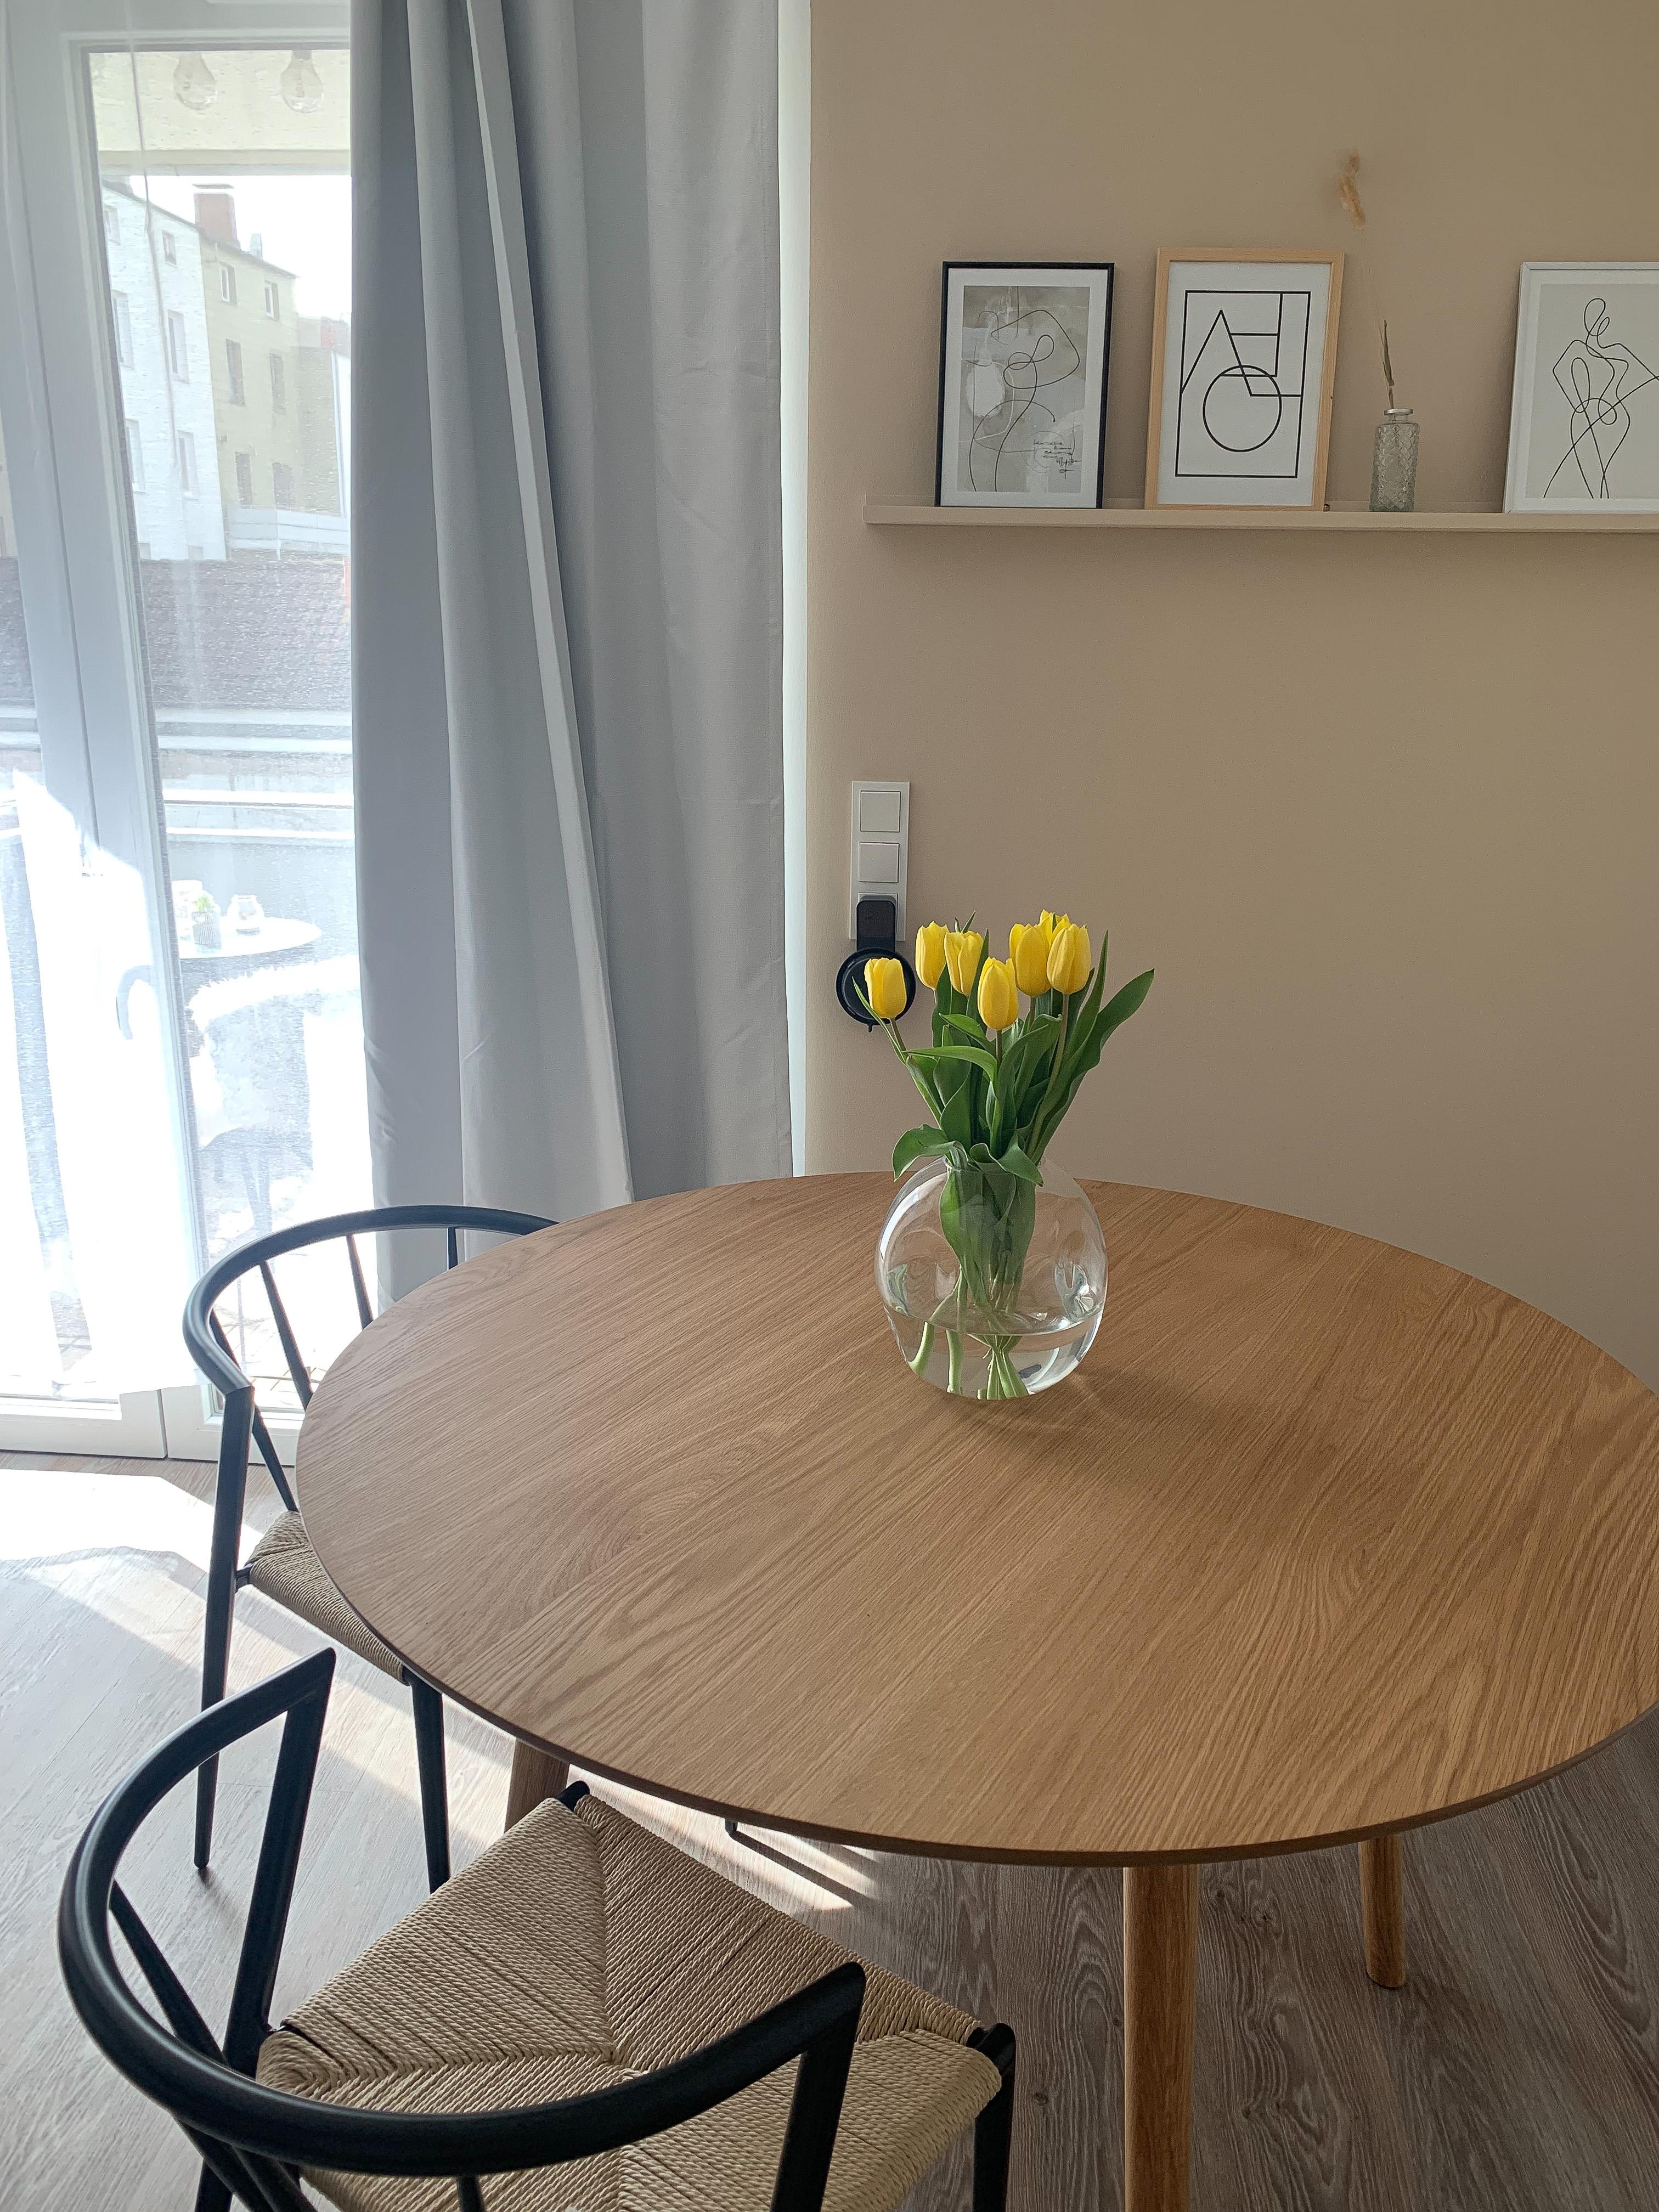 #table #eiche #flowers #chair #wienergeflecht #minimalism #couchmagazin 